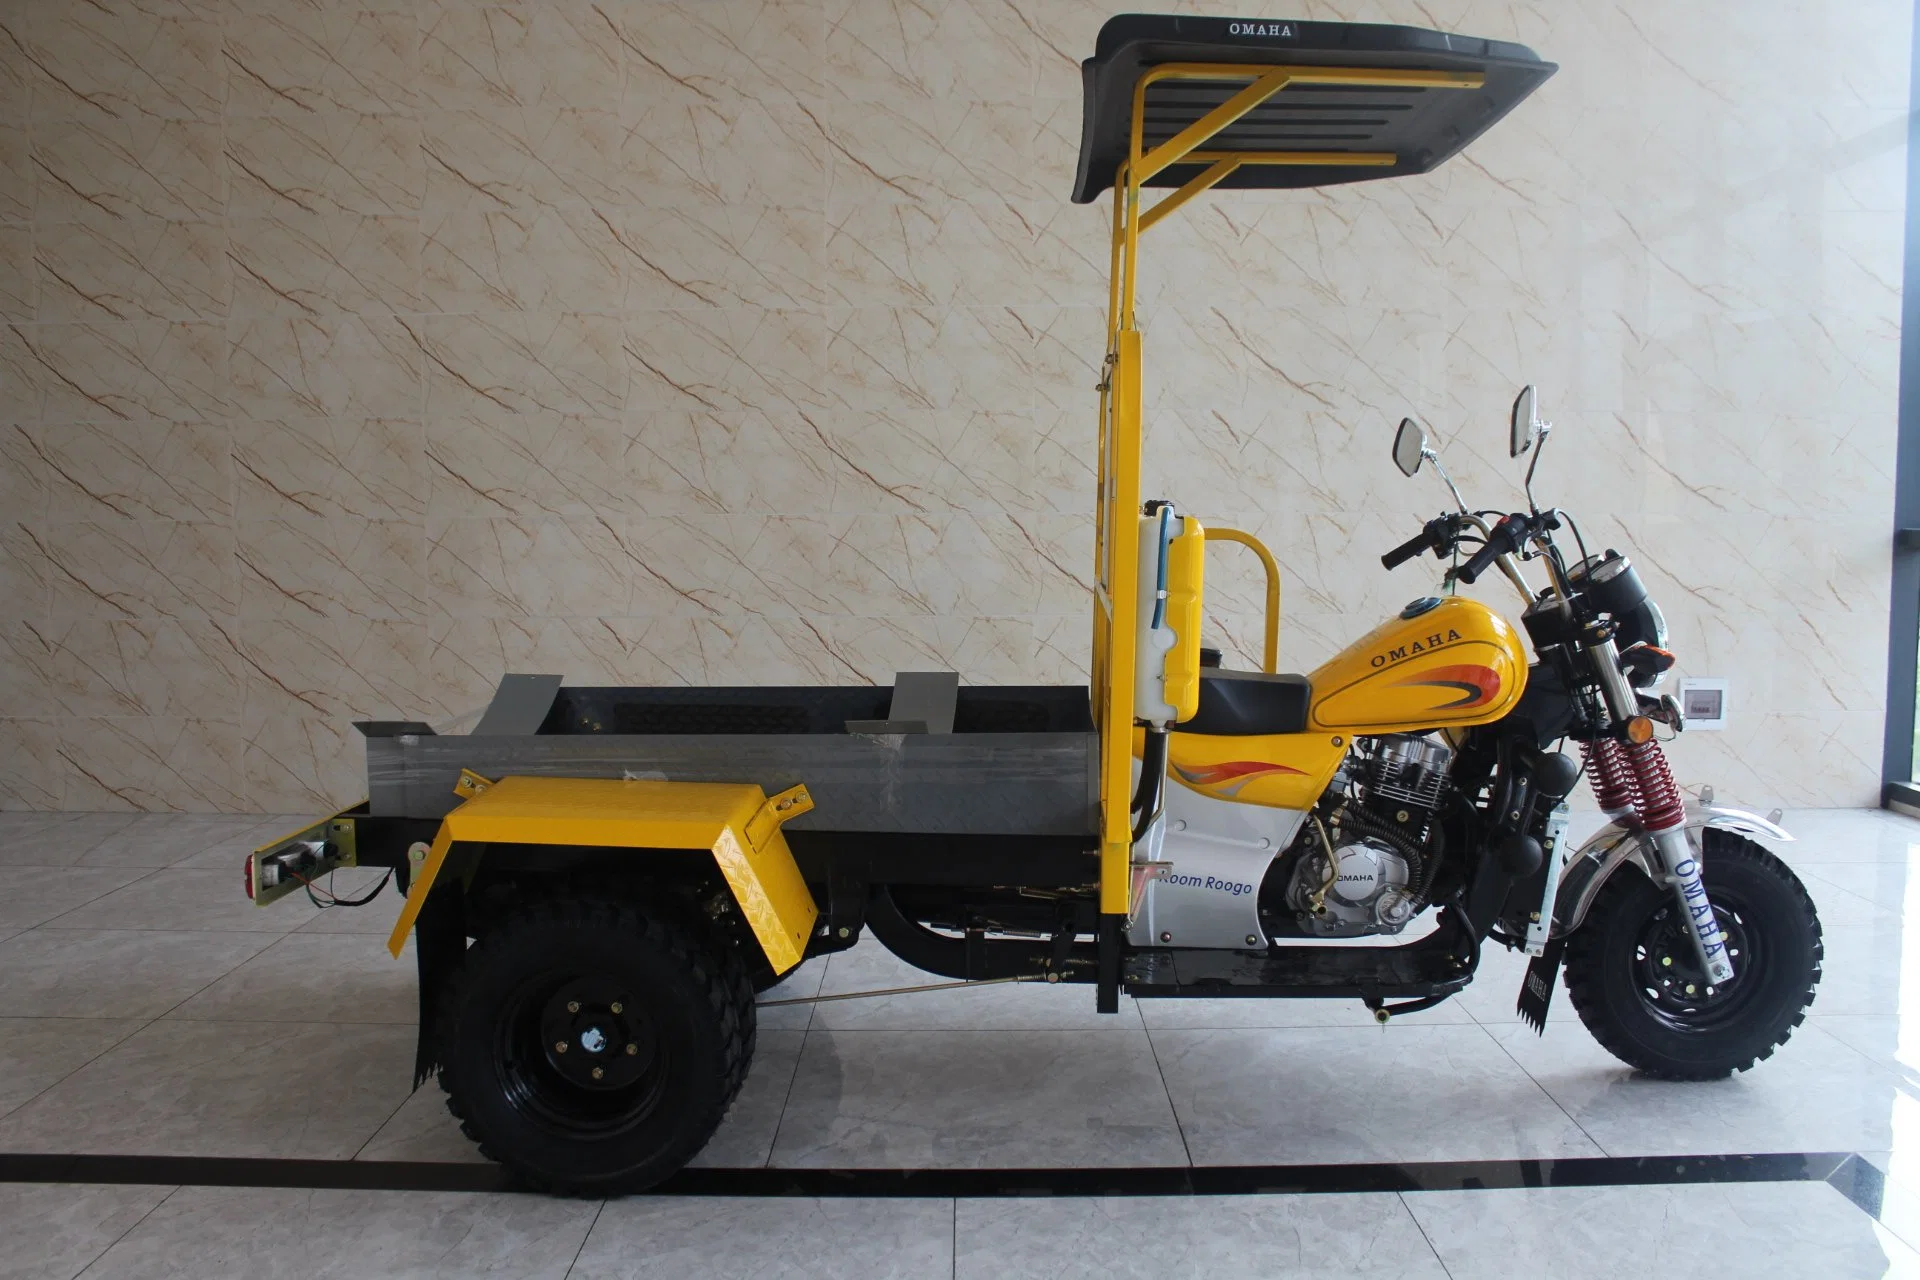 City Transporter Seated Three Wheel Motorcycleelectric Cargo Tricycle Auto Rickshaw Passenger Wheel Motorcycle